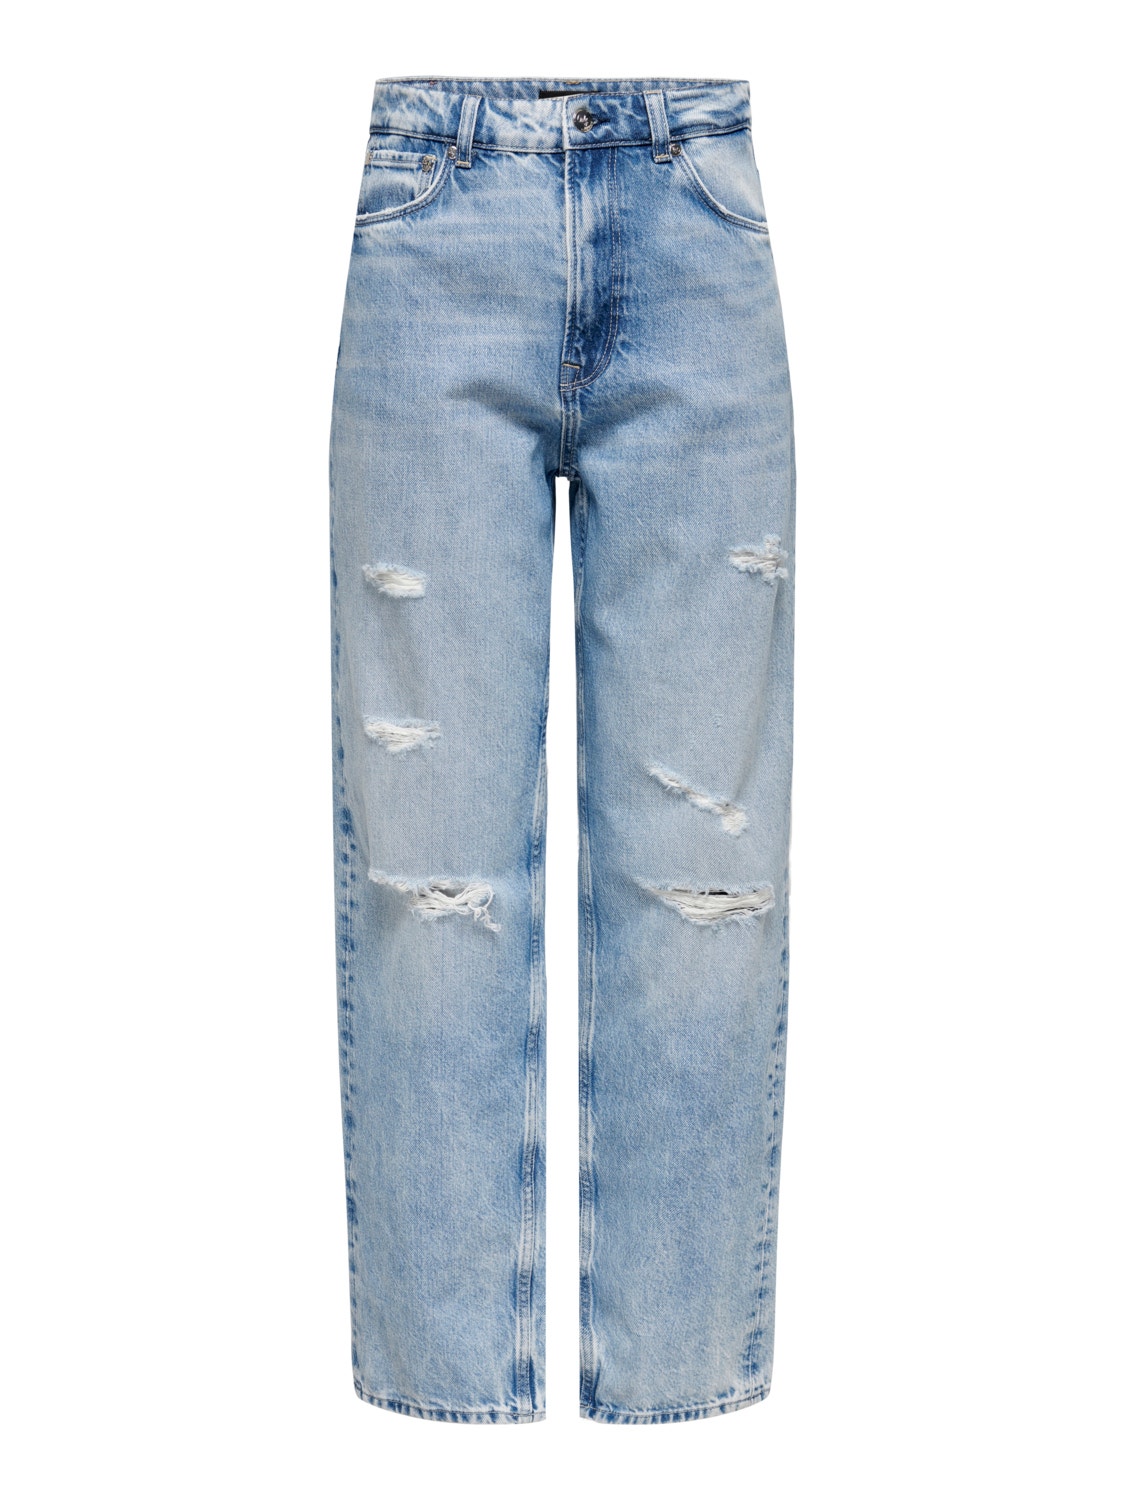 ONLY Jeans Boyfriend Fit -Light Blue Denim - 15253636